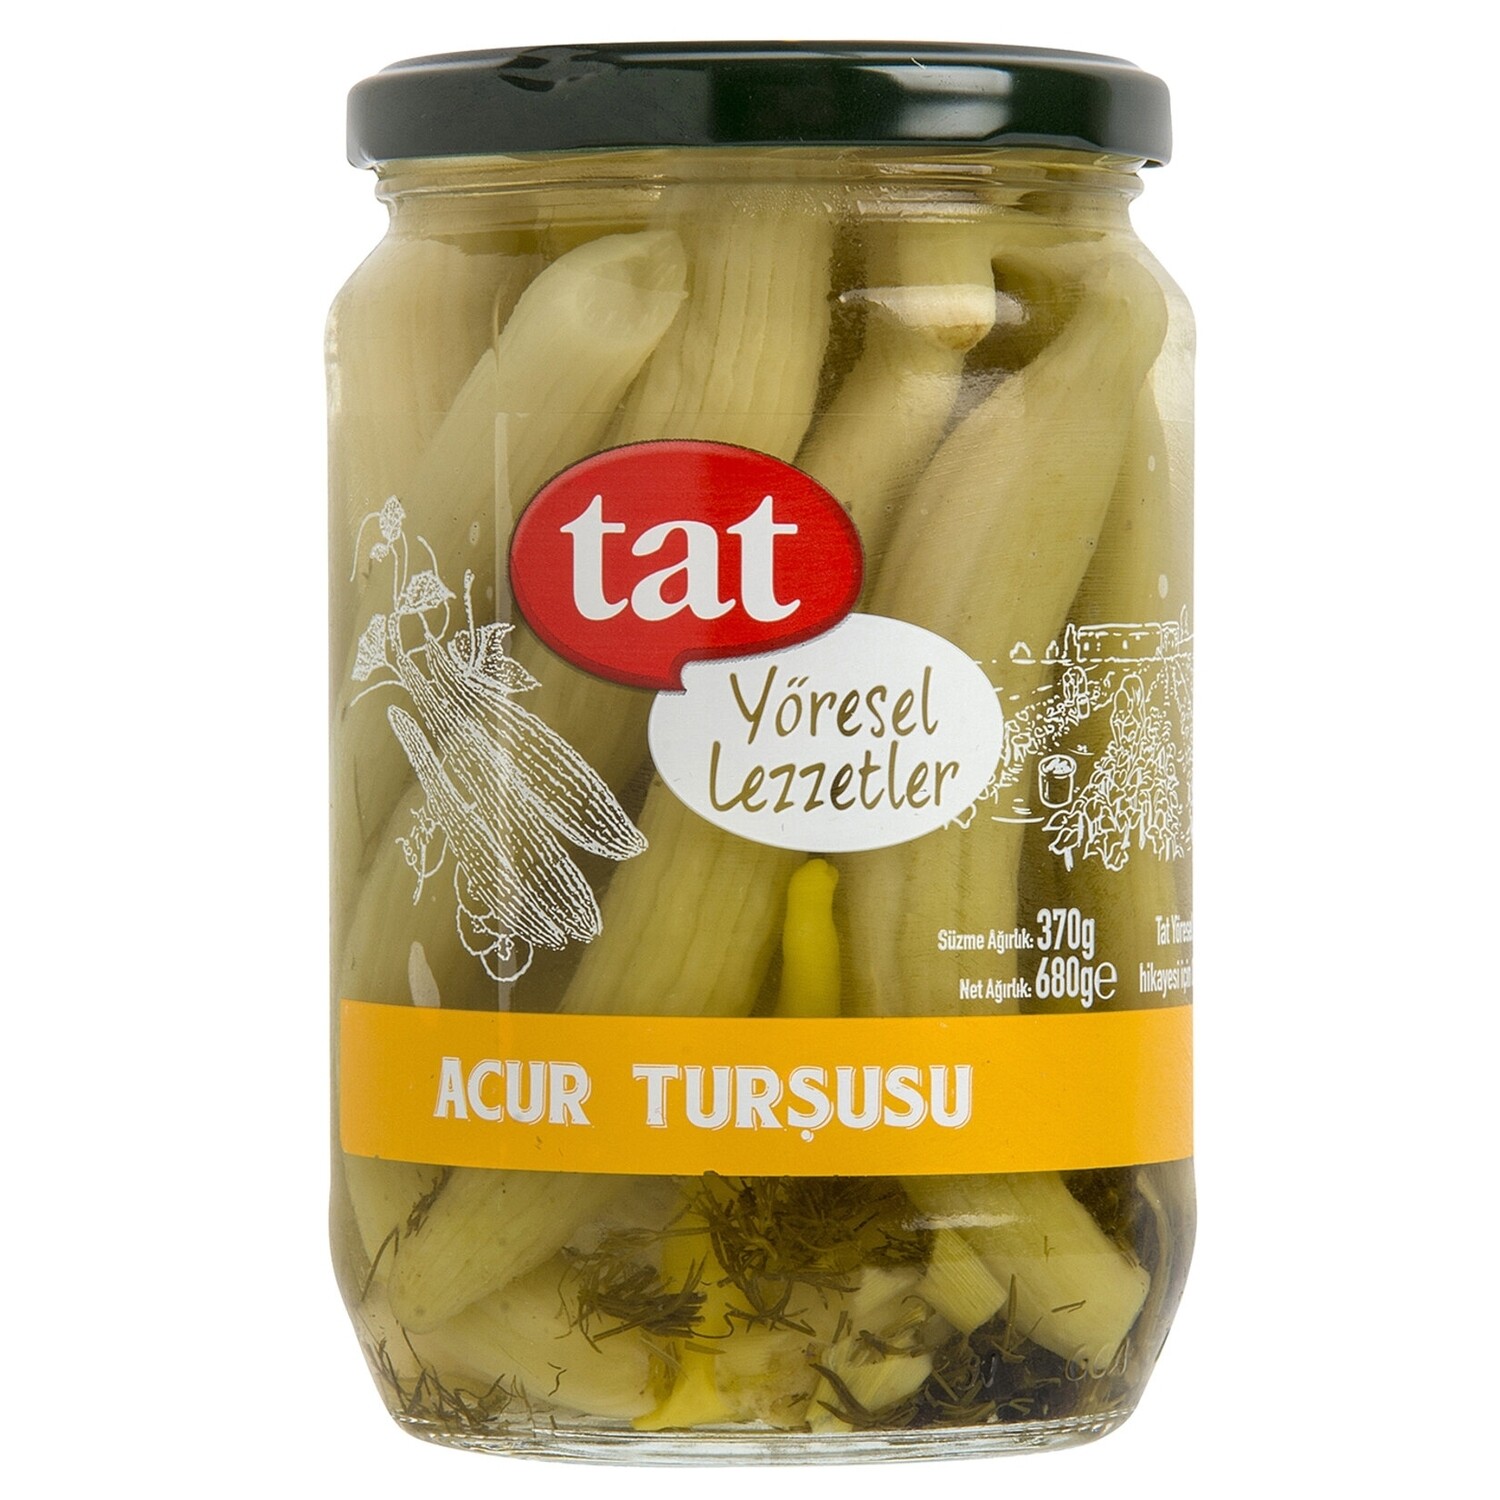 TAT Pickled Acur Tursusu Jar 720g